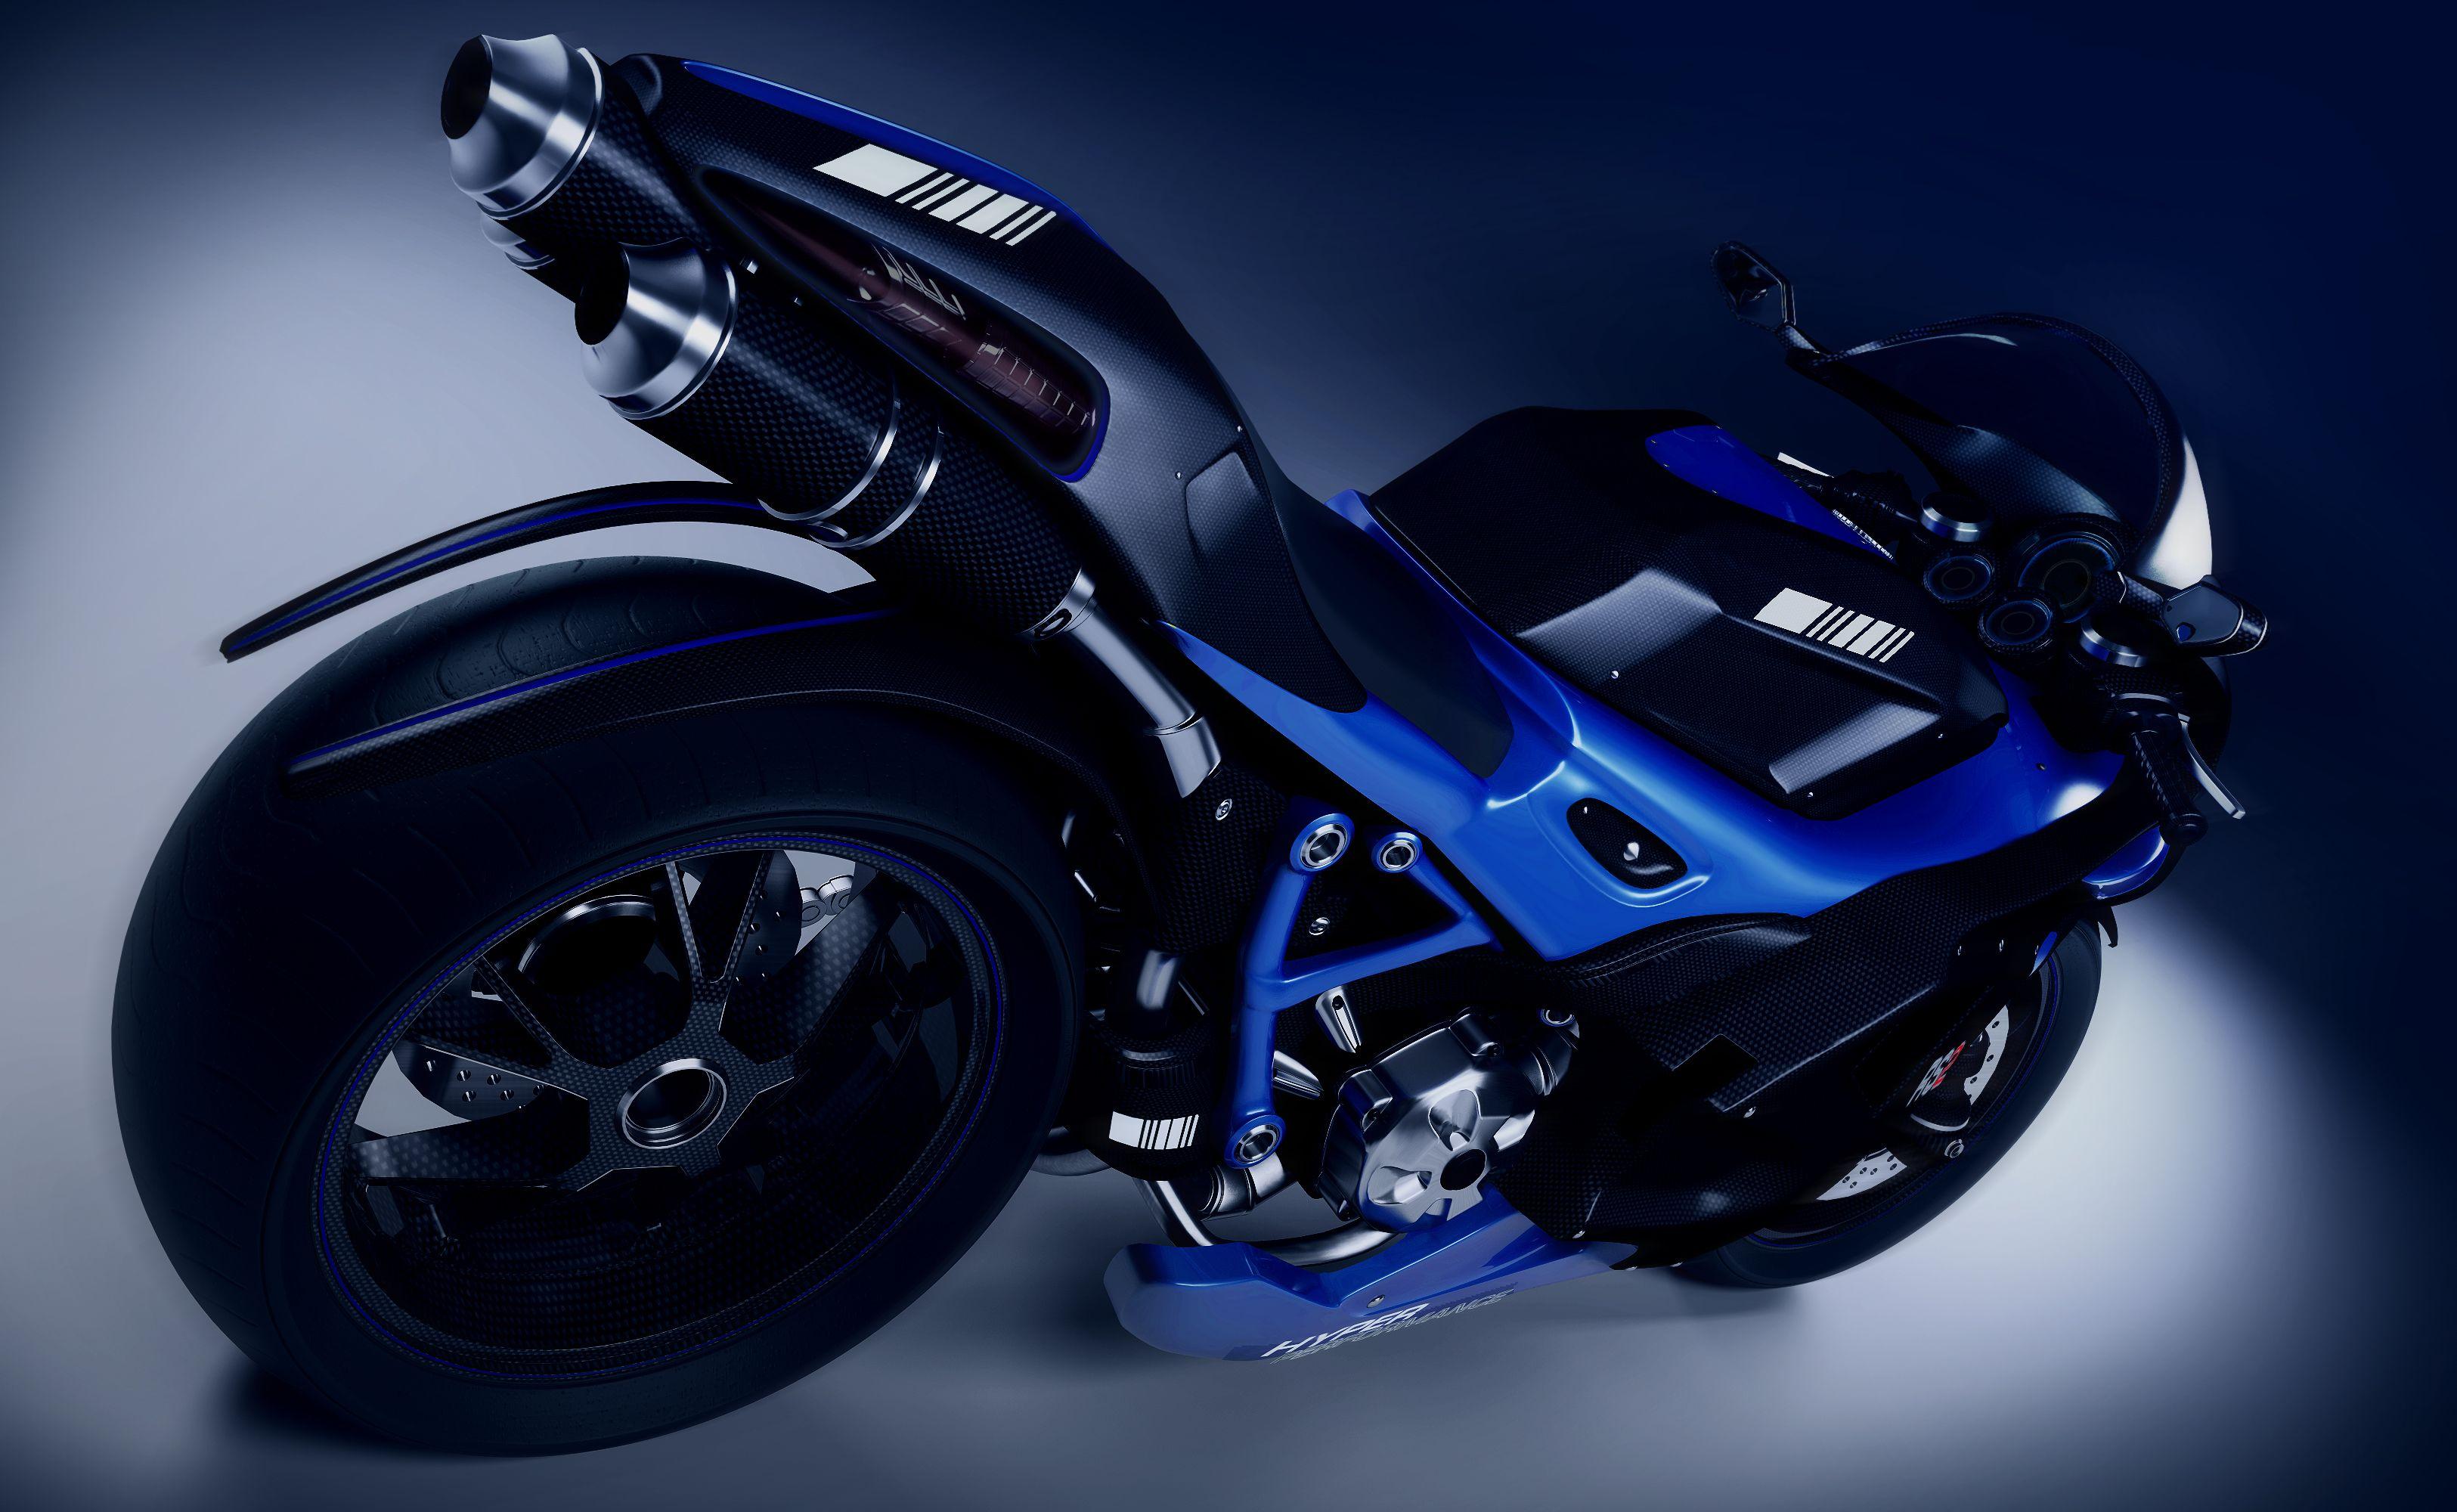 Включи байки синие. Мотоцикл Дукати сине-черный. Дукати мотоцикл синий. Темно синий Дугатти мотоцикл.. Ямаха р6.